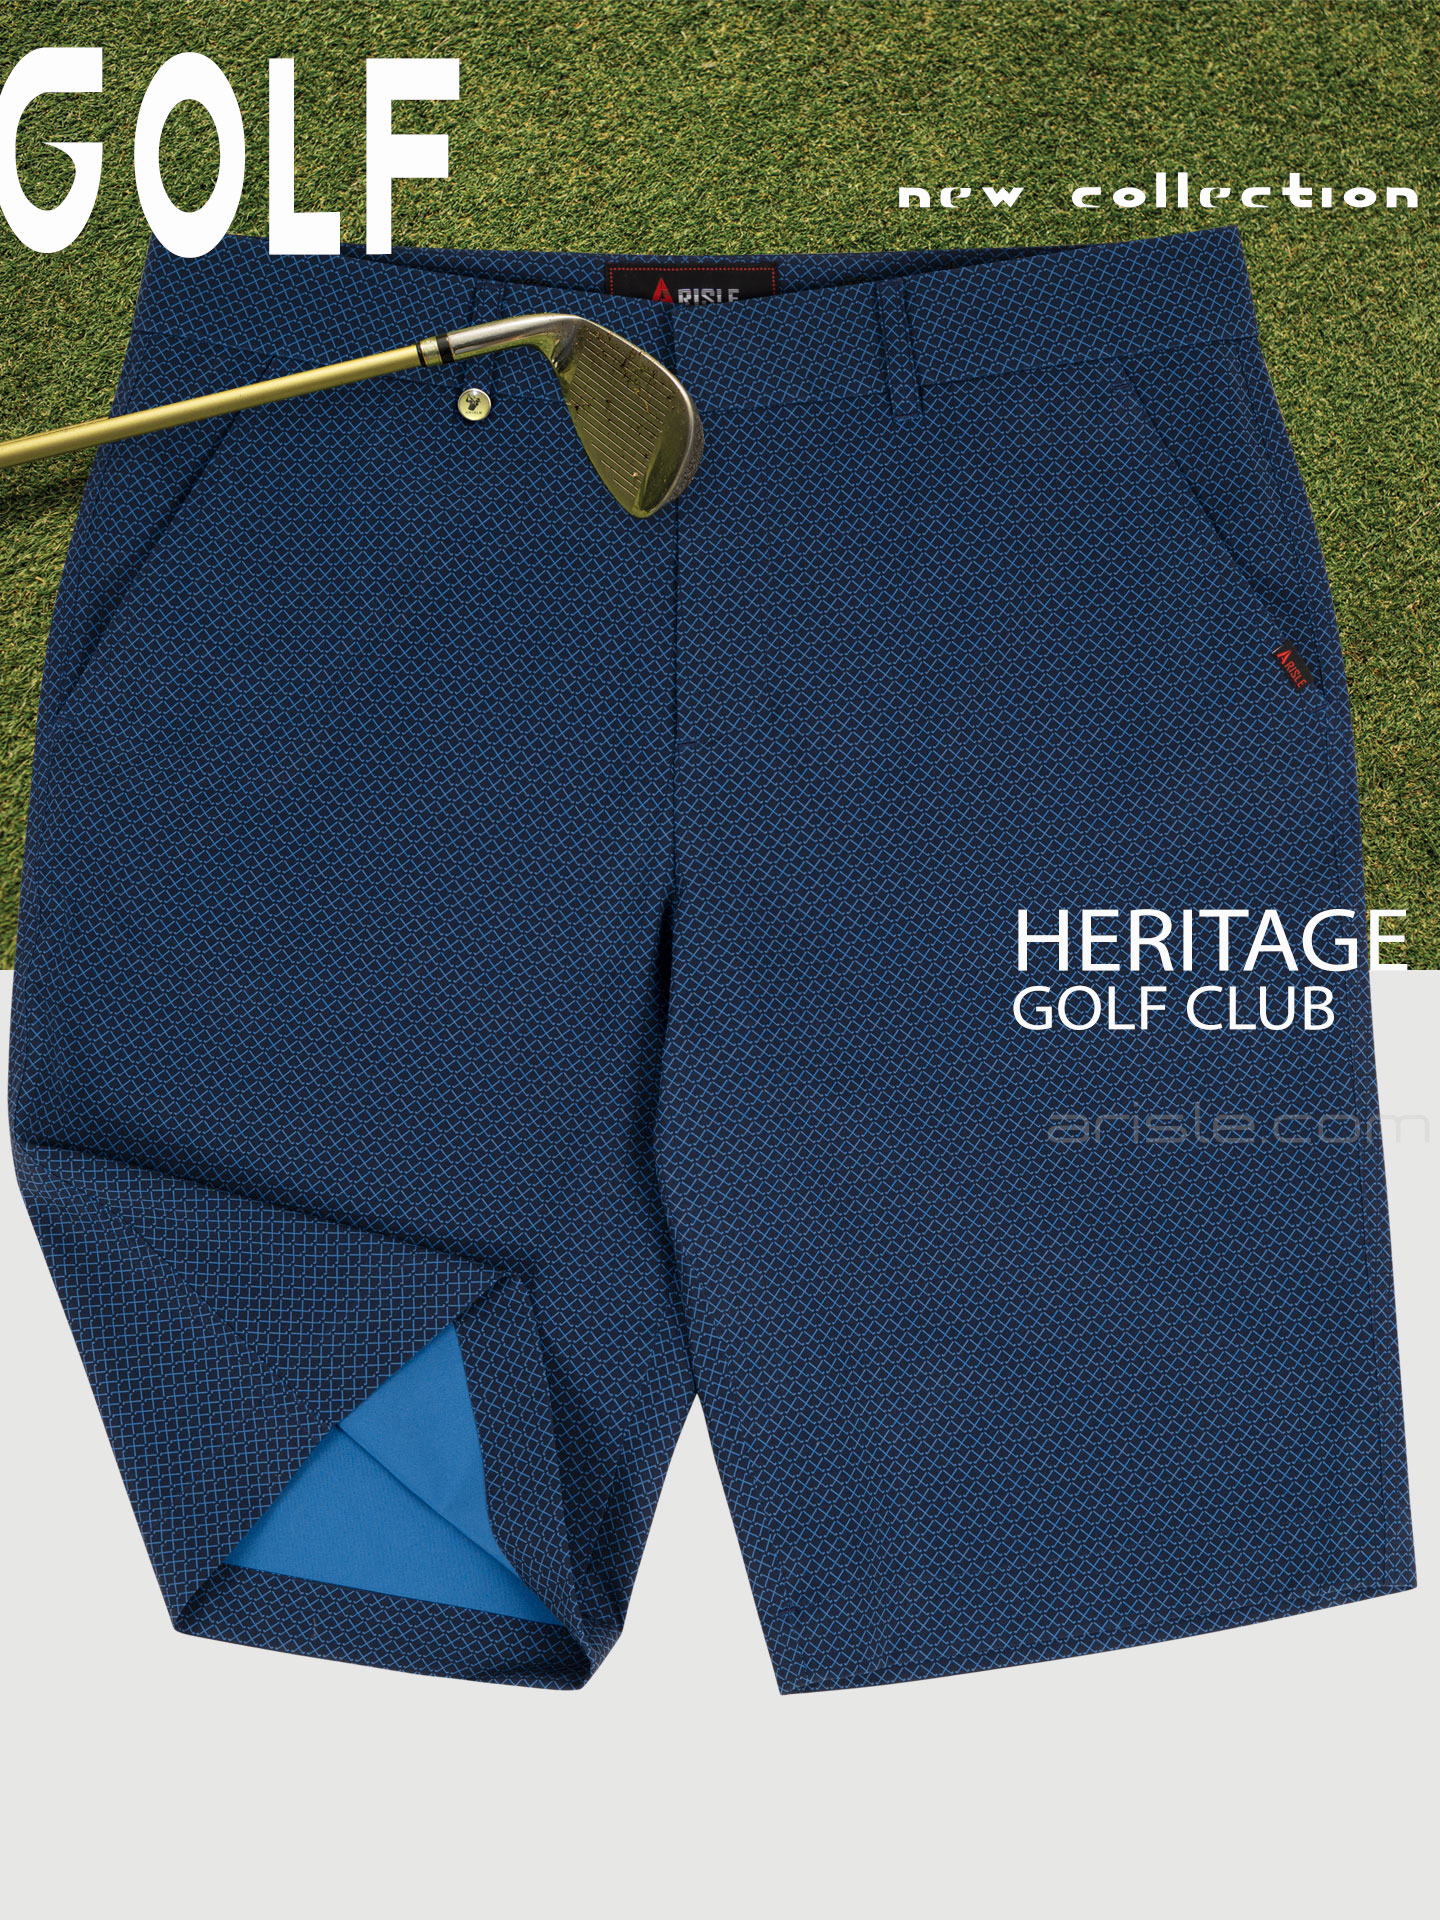 Quan-Short-Golf-ARISLE-A-Class-Heritage-Club-6